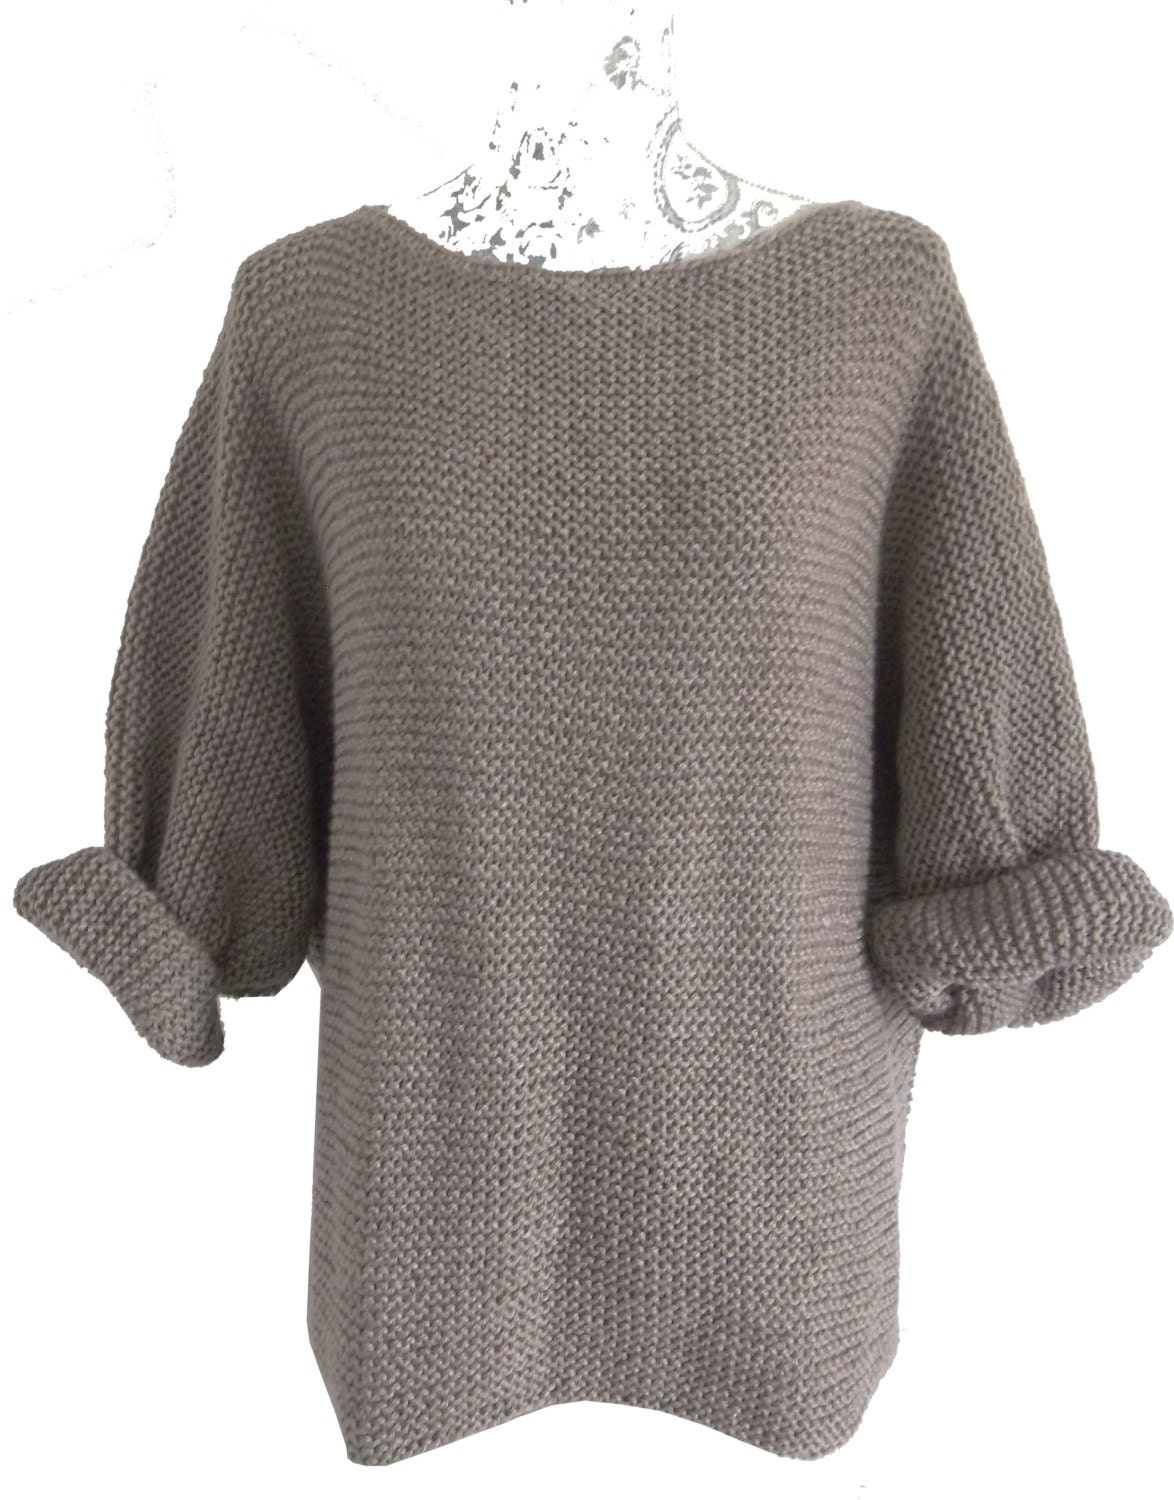 Aran Garter Stitch Sweater. Knitting Pattern. PDF Download. | Etsy